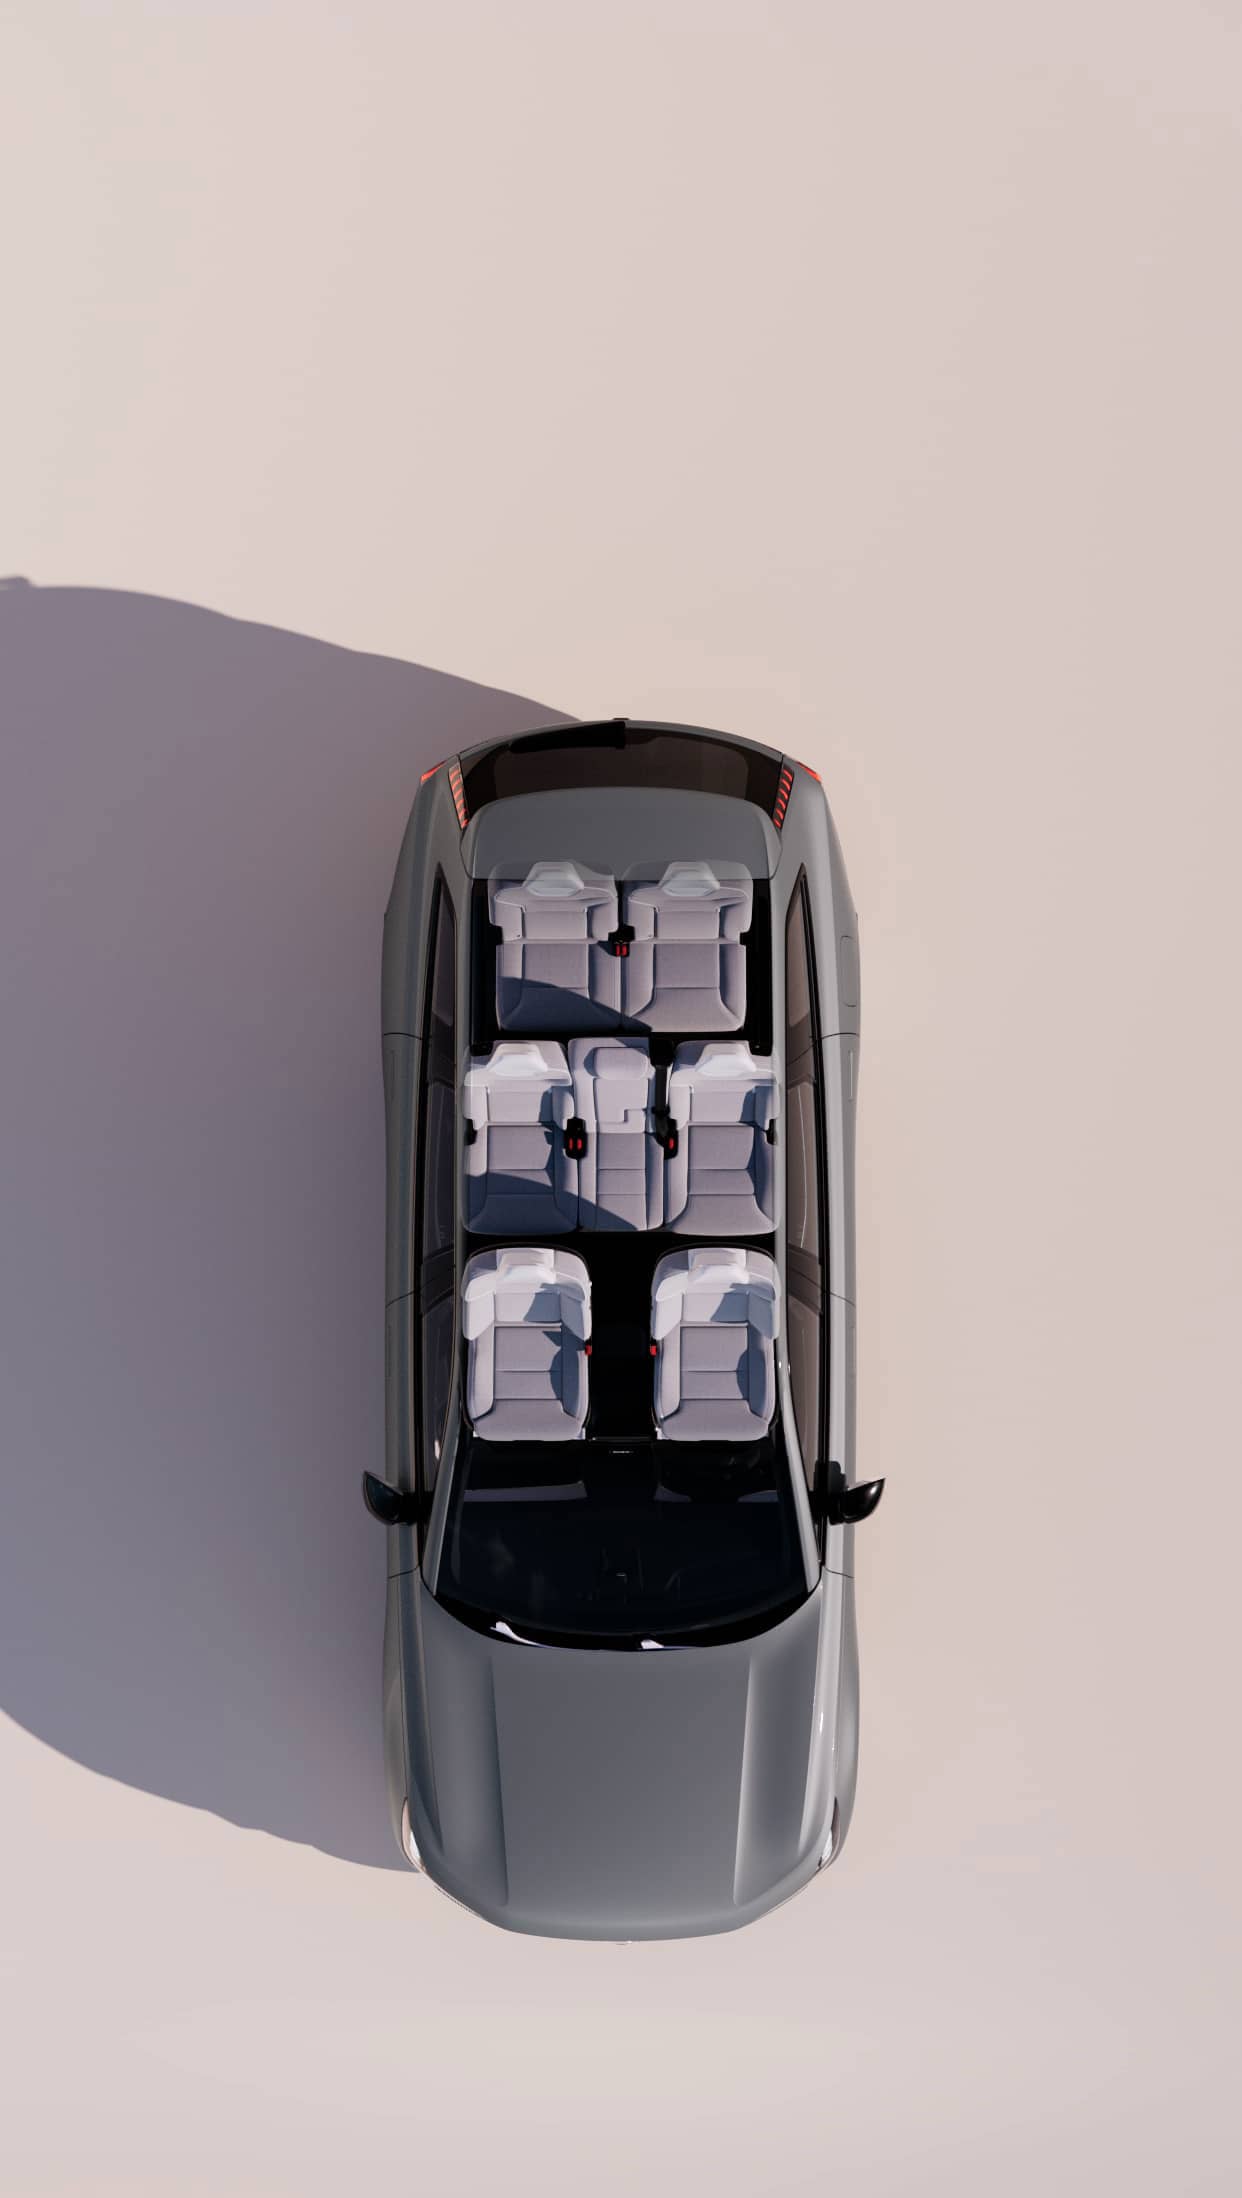 Teto panorâmico do Volvo EX90 visto de cima